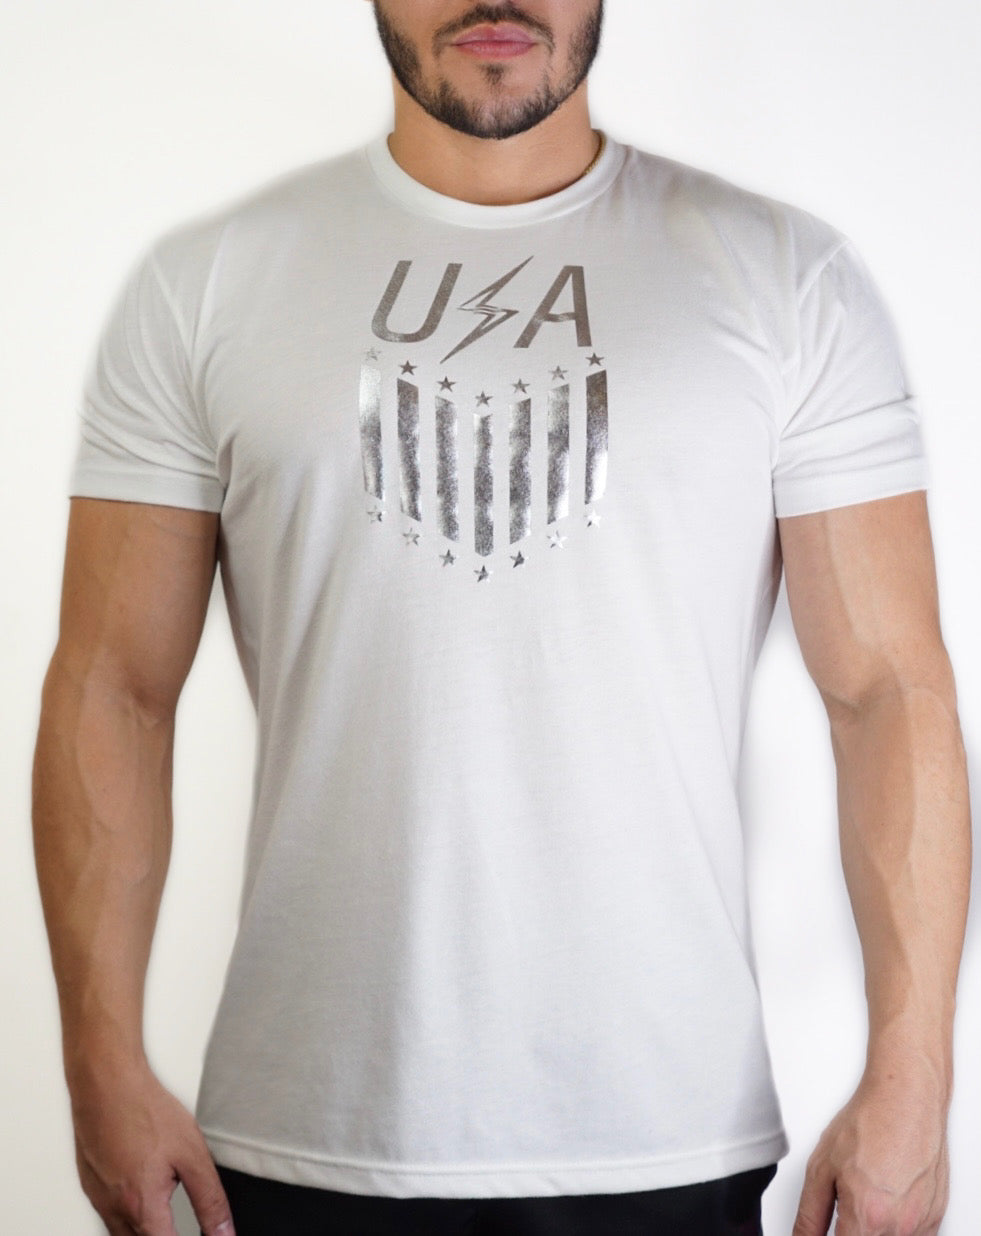 Limited Edition Team USA Stars & Stripes Tee-White/Chrome